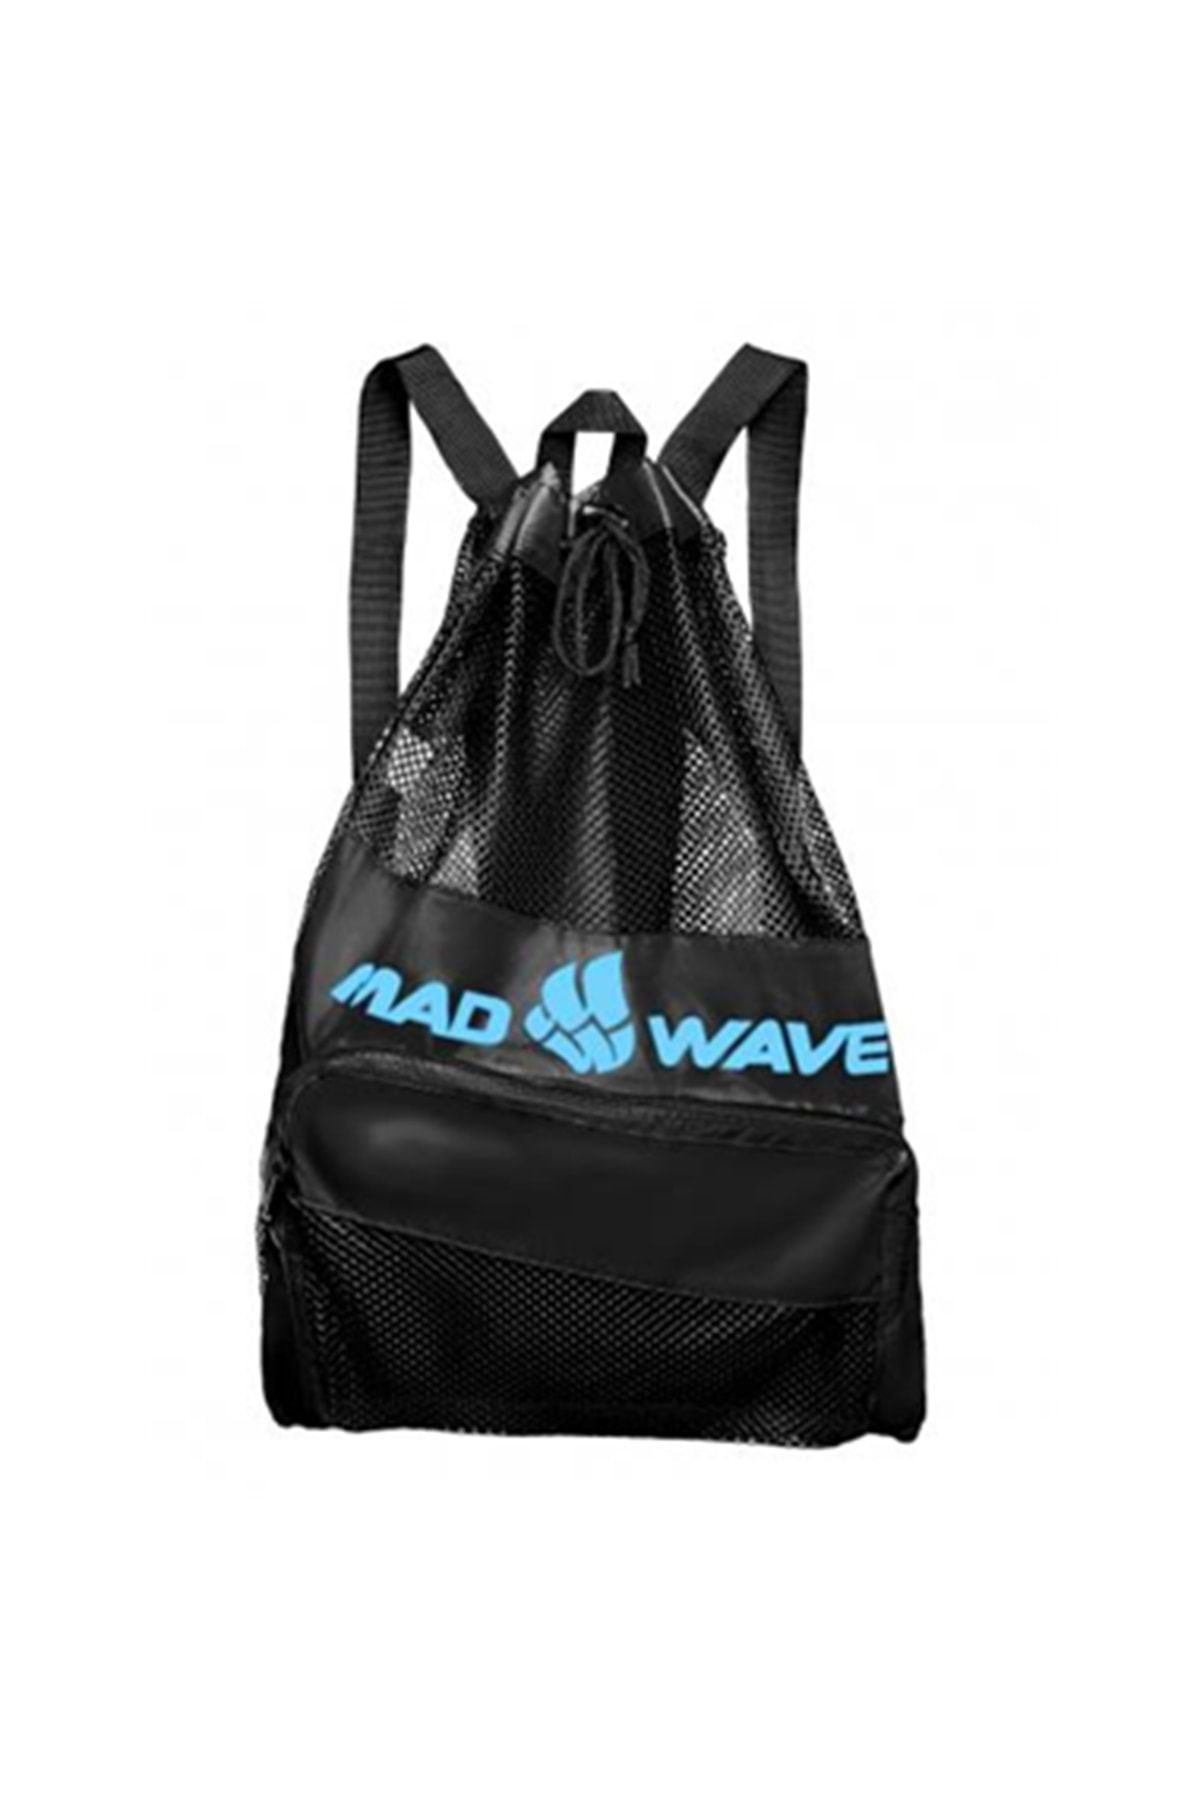 Mad Wave Madwave Sack Vent Dry Bag, 65x48.5 Siyah File Çanta